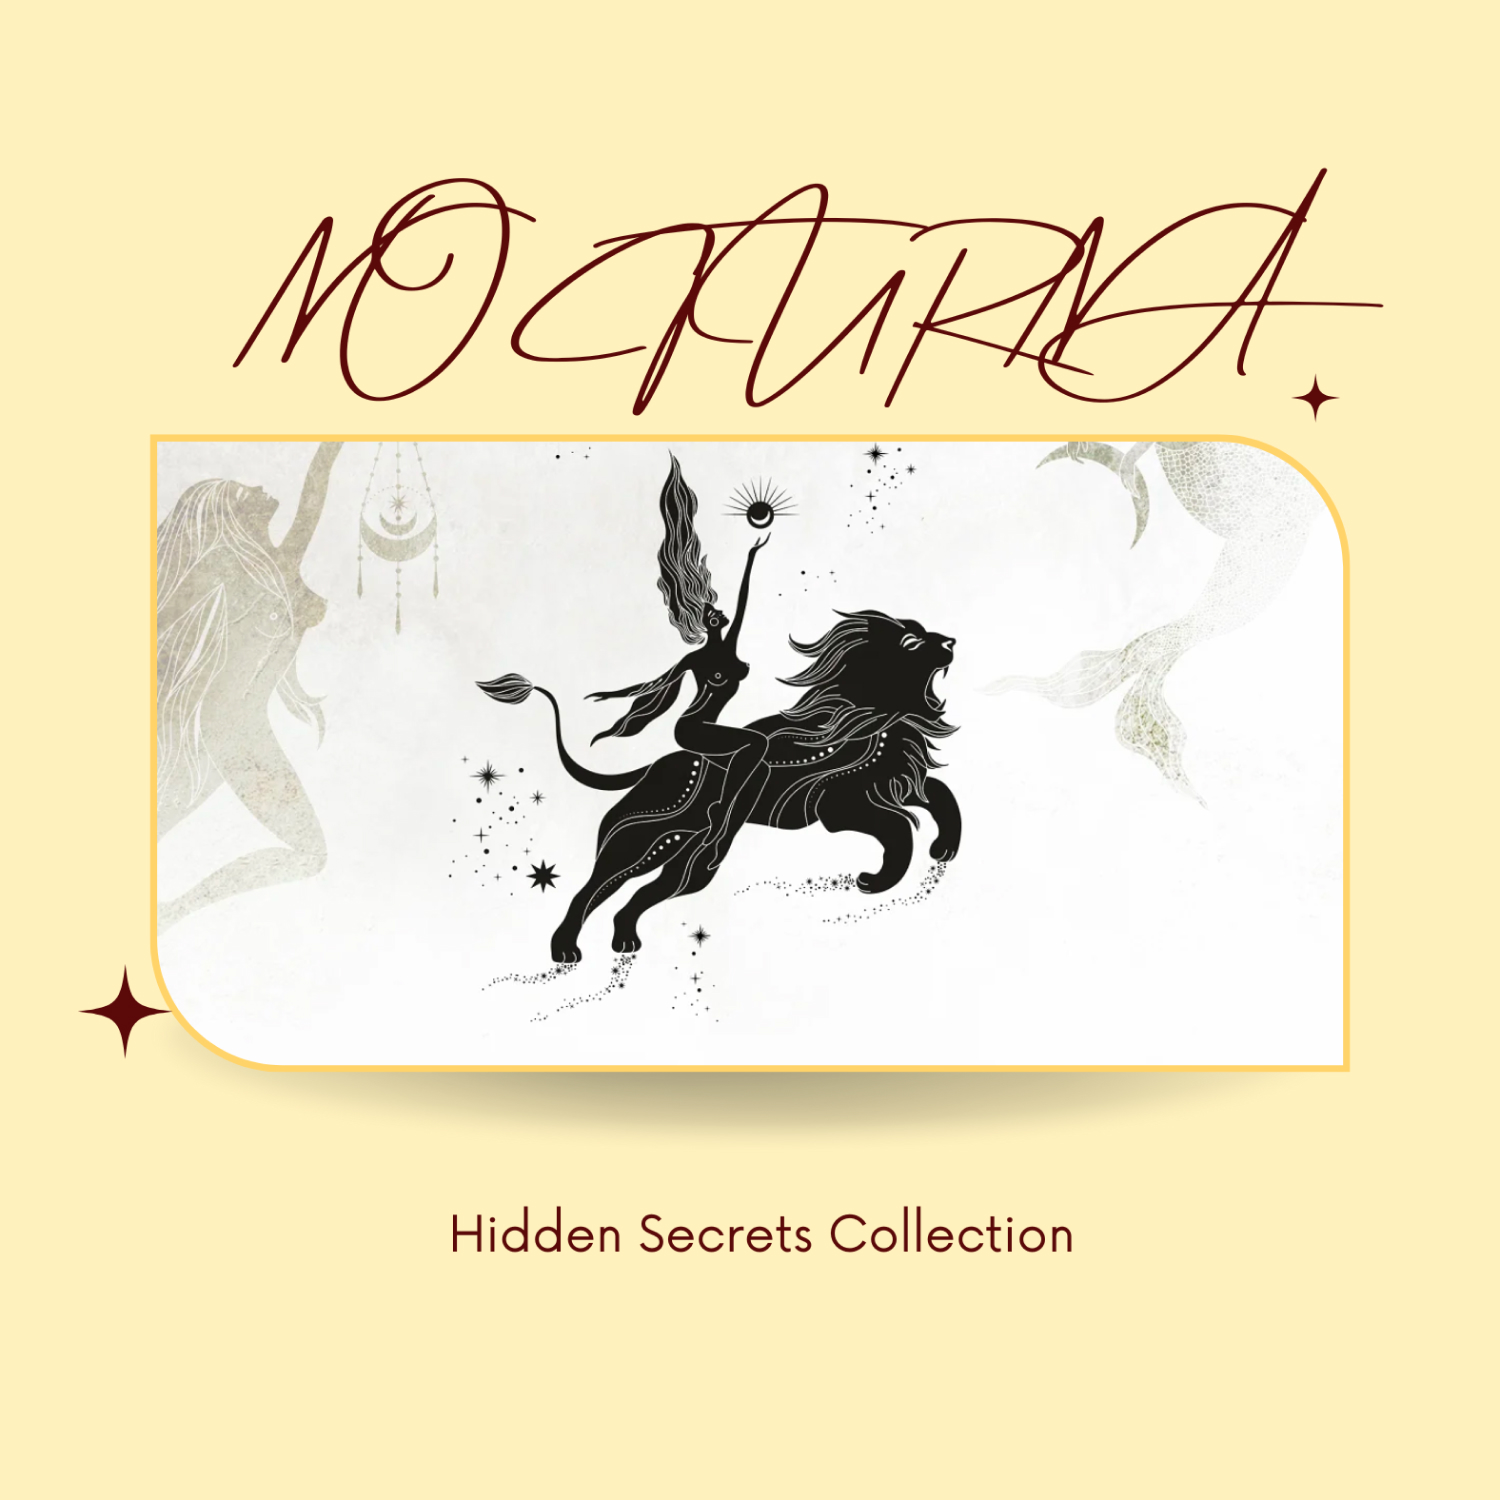 NOCTURNA Hidden Secrets Collection.